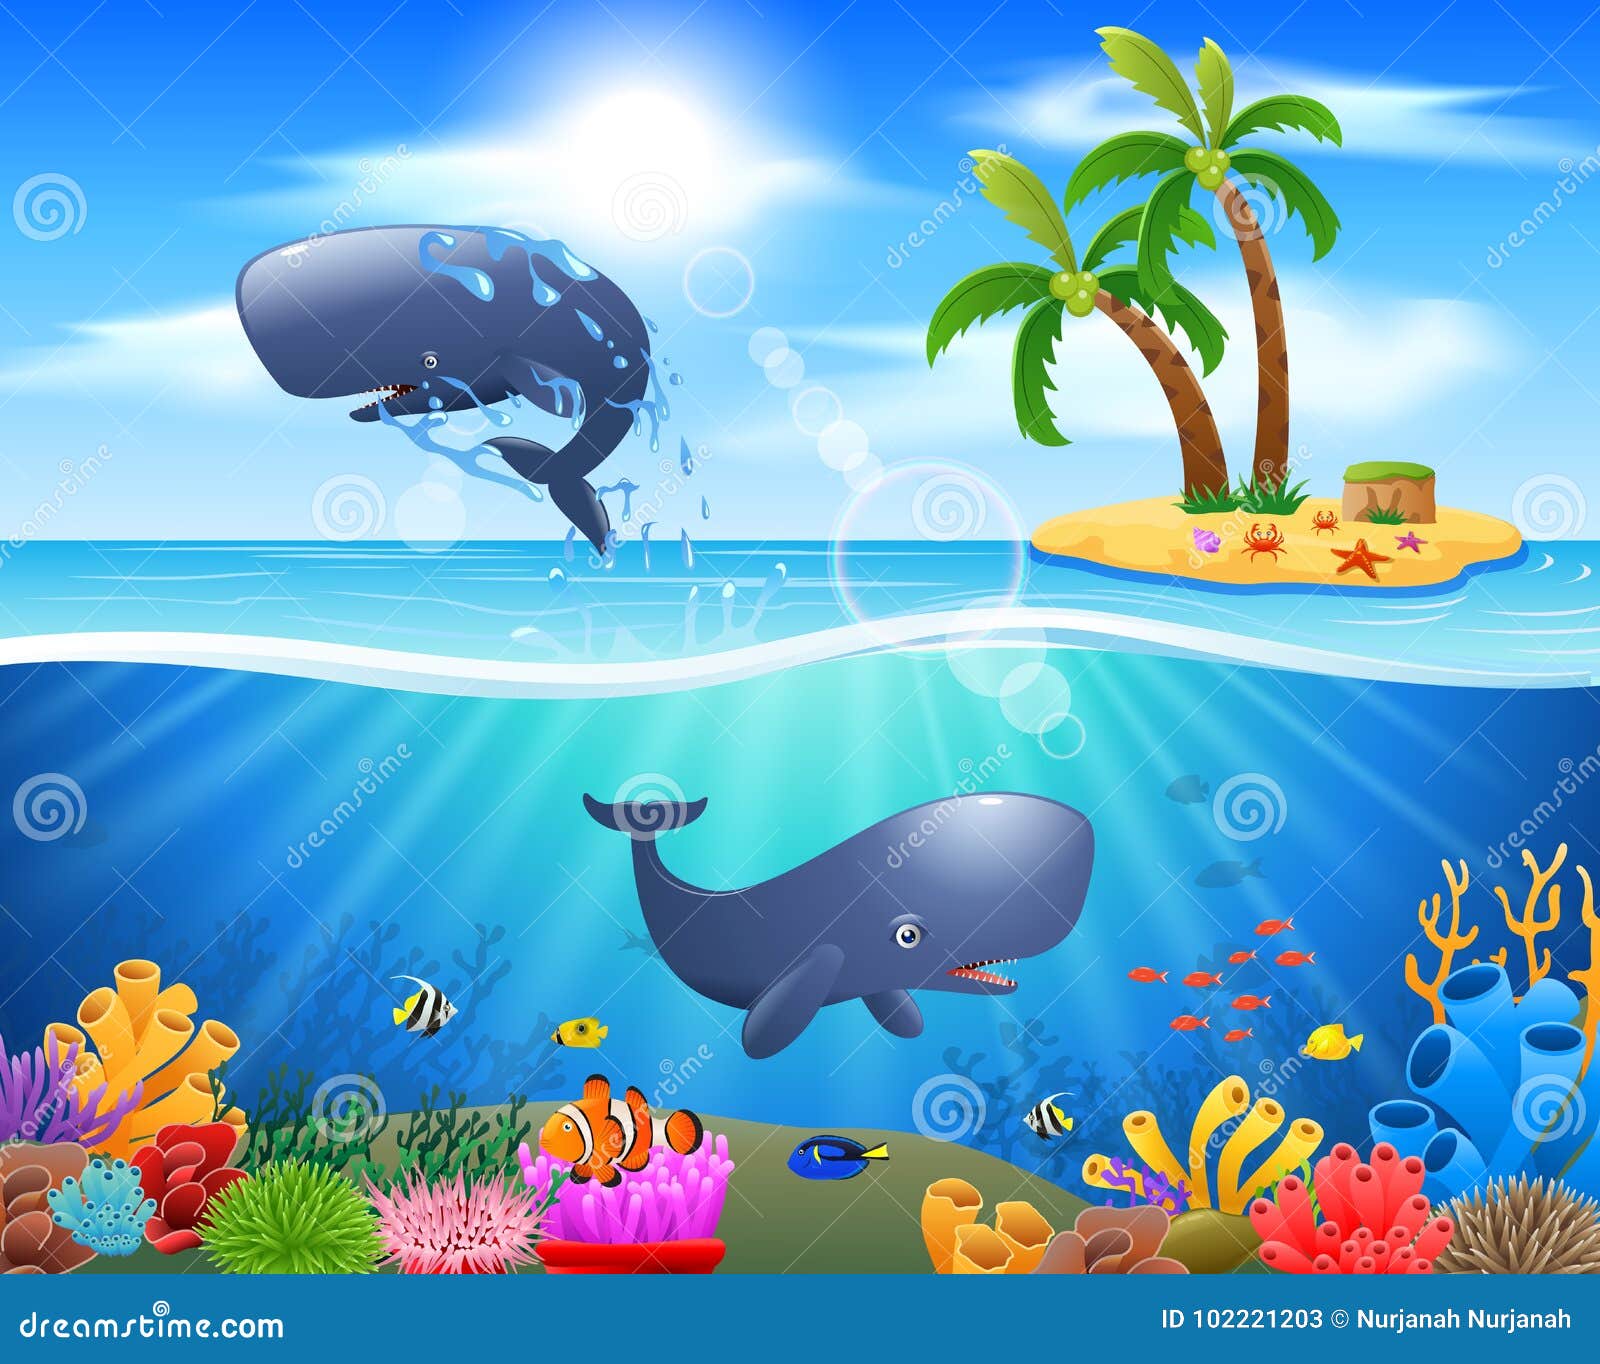 Cartoon Sperm Whale Jumping in Blue Ocean Stock Vector - Illustration of  icon, mammal: 102221203